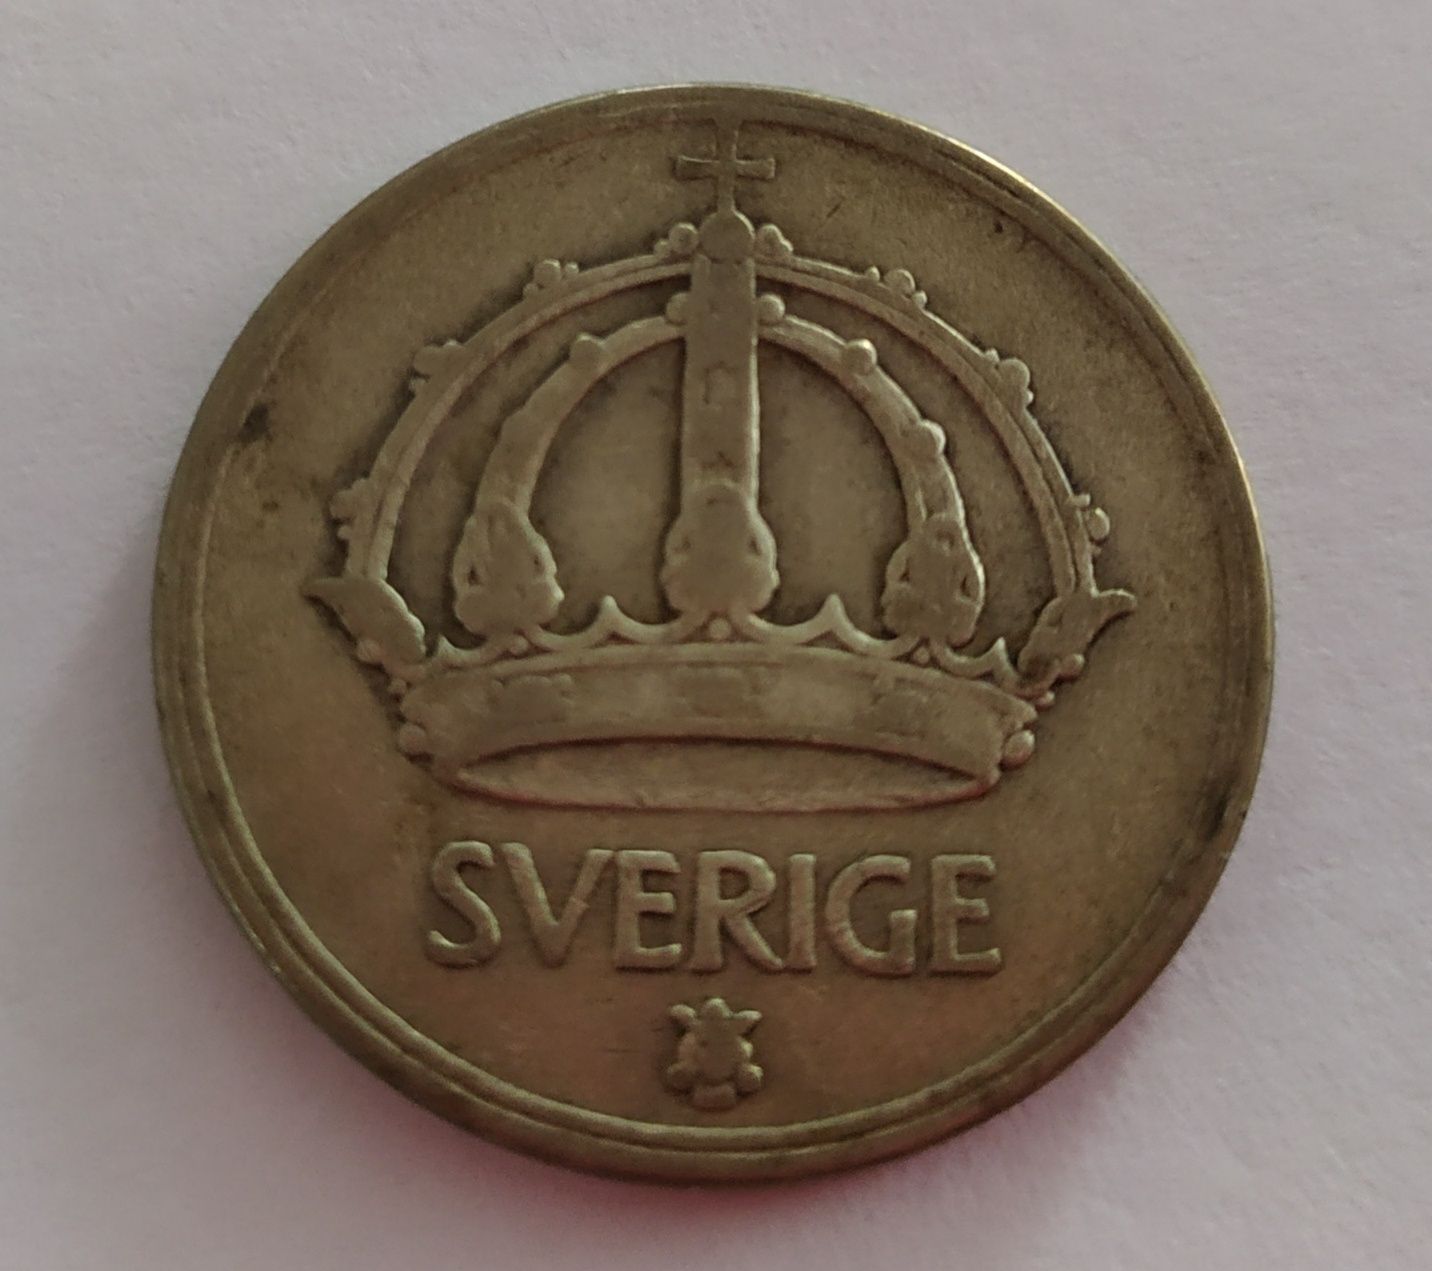 Srebrna moneta kolekcjonerska - 50 ORE - SZWECJA z 1950 roku